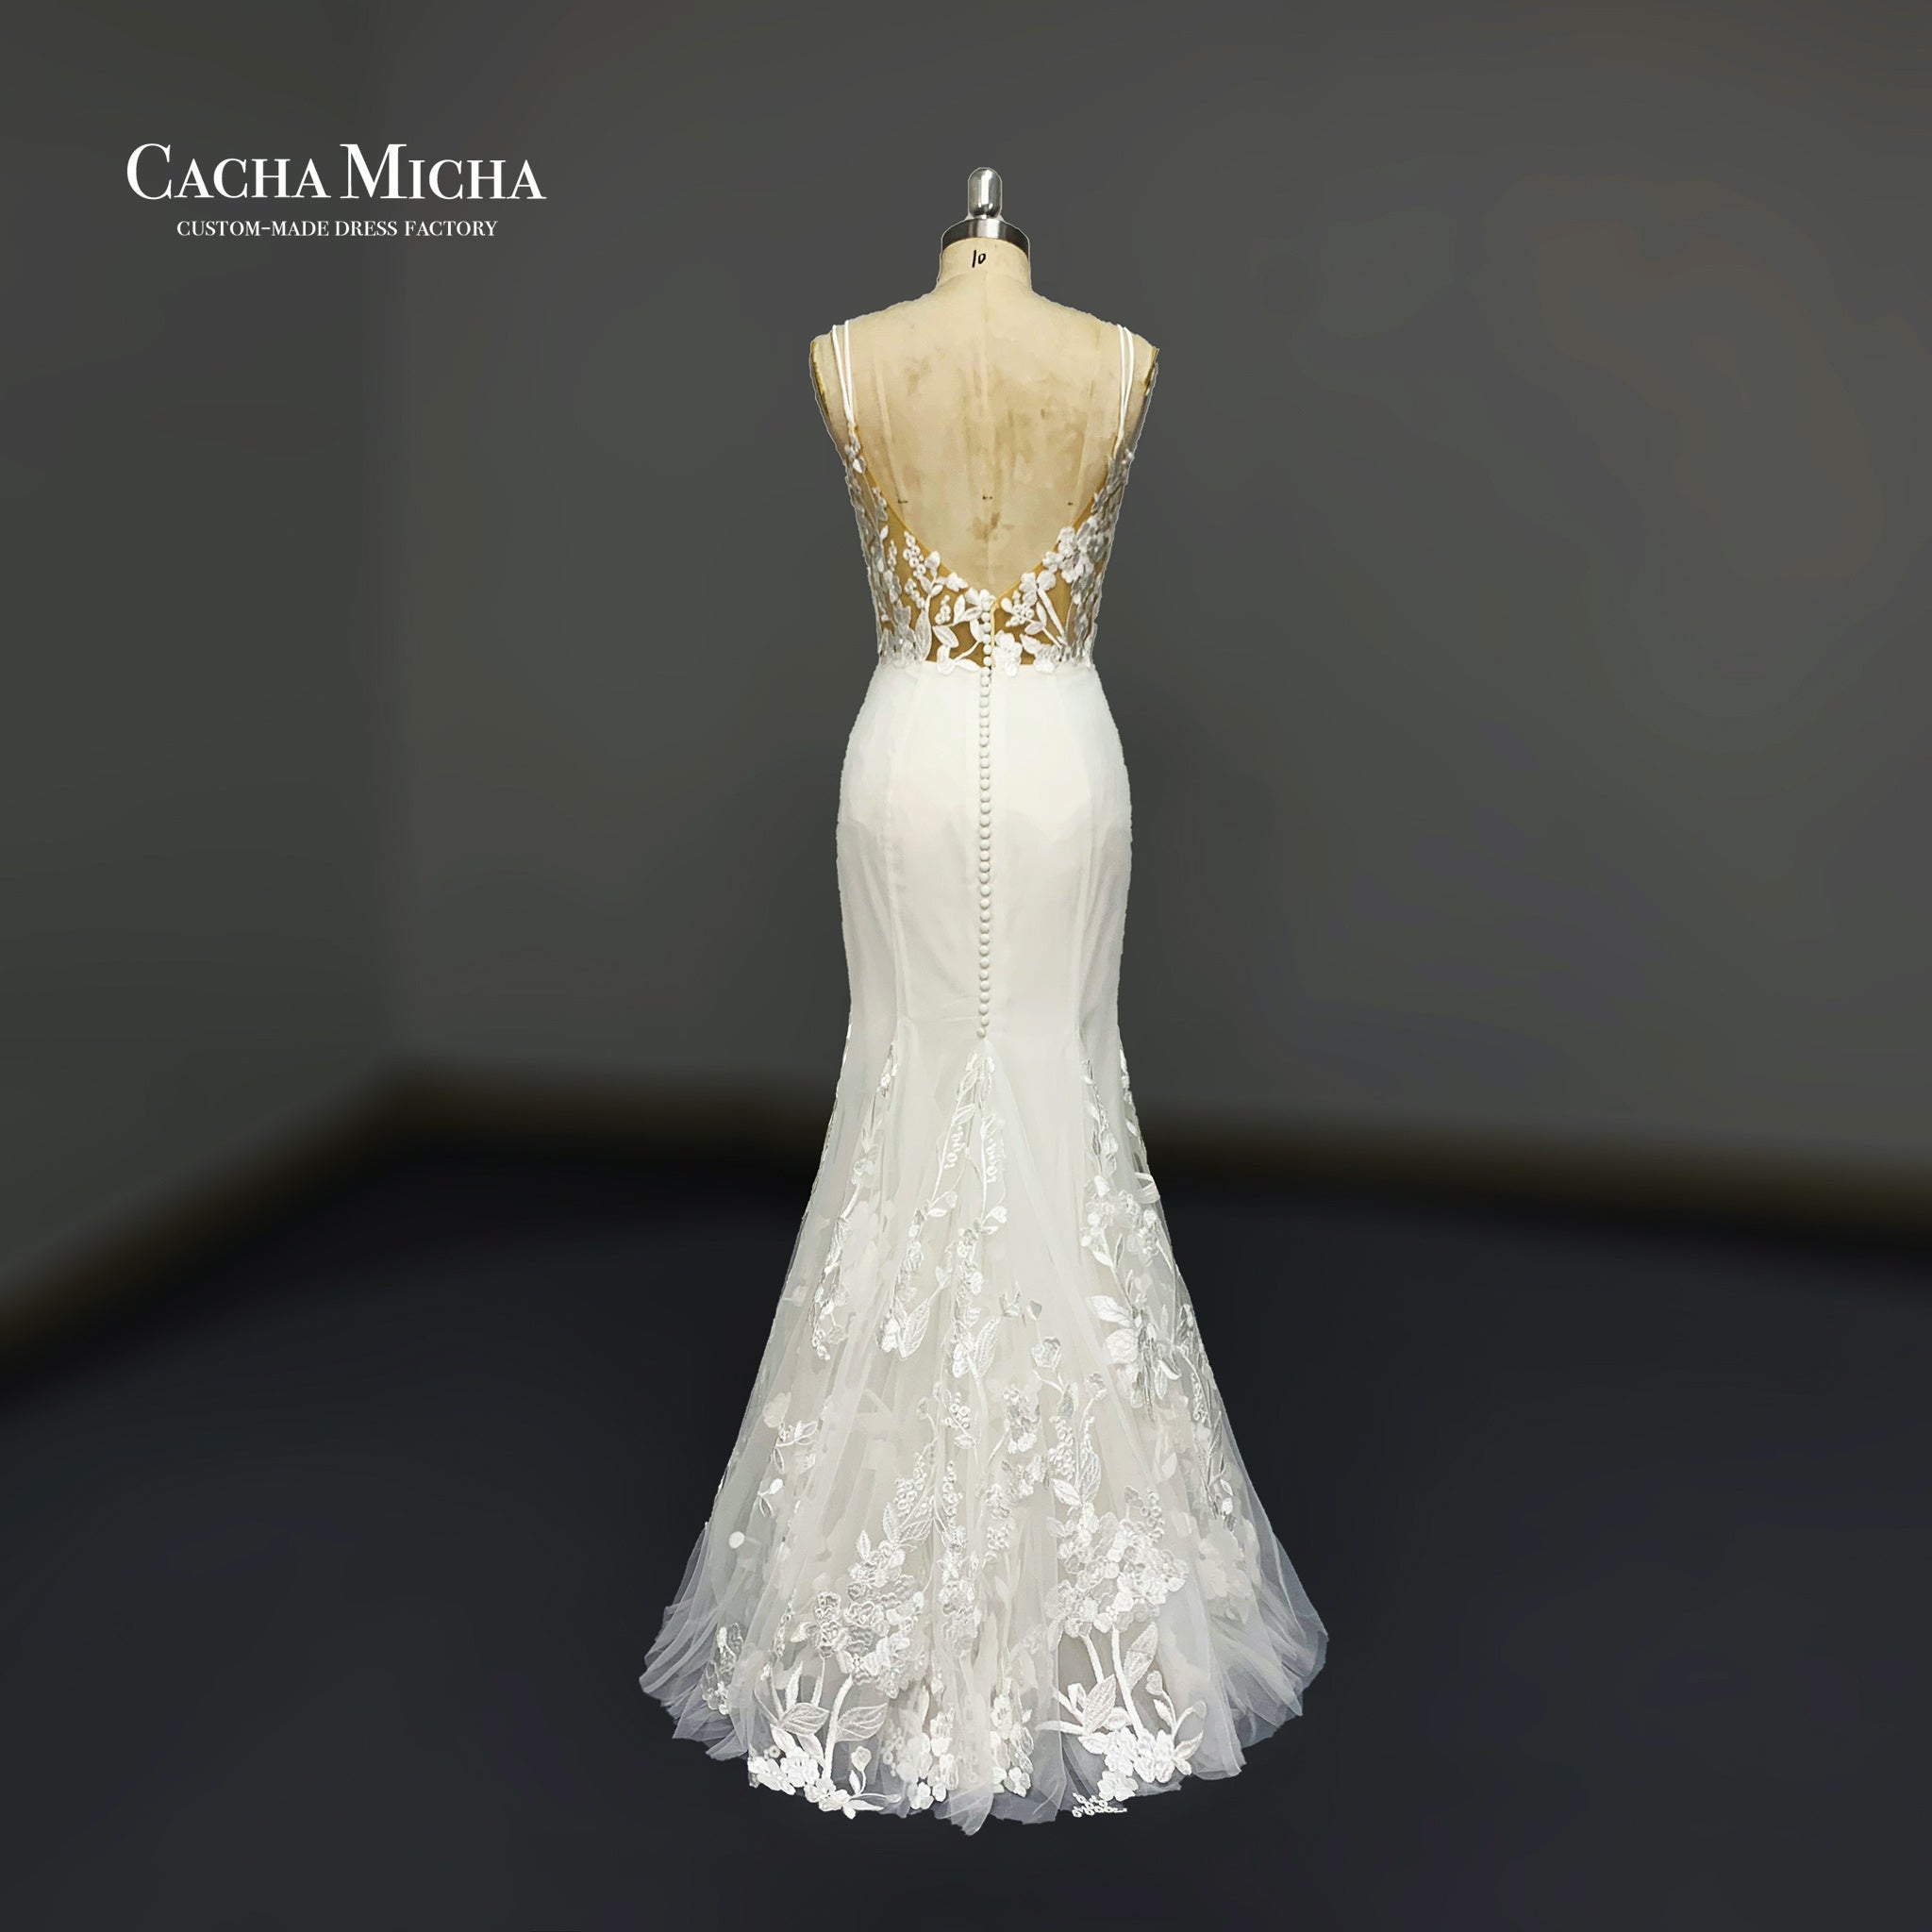 godet lace floor length wedding dress with detachable skirt O524